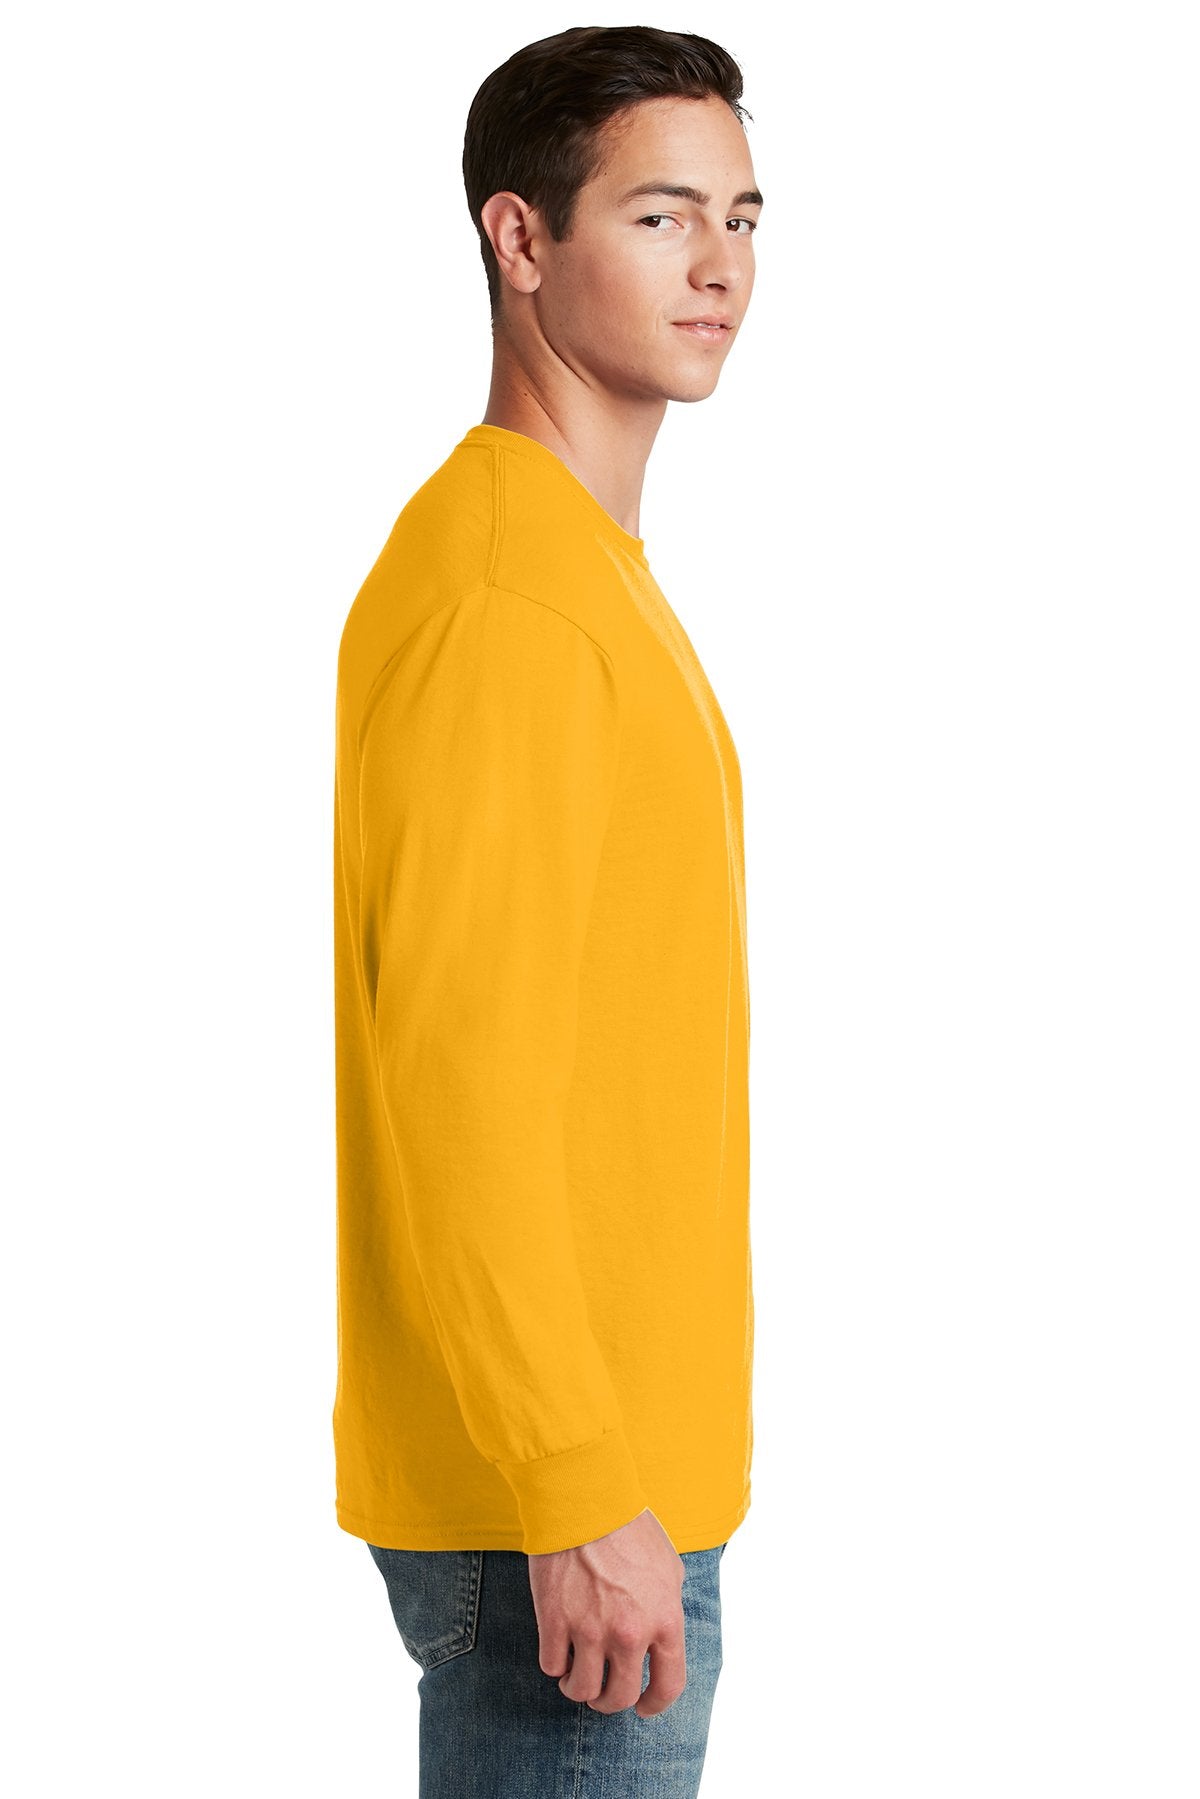 Jerzees Dri-Power 50/50 Cotton/Poly Long Sleeve T-Shirt 29LS Gold